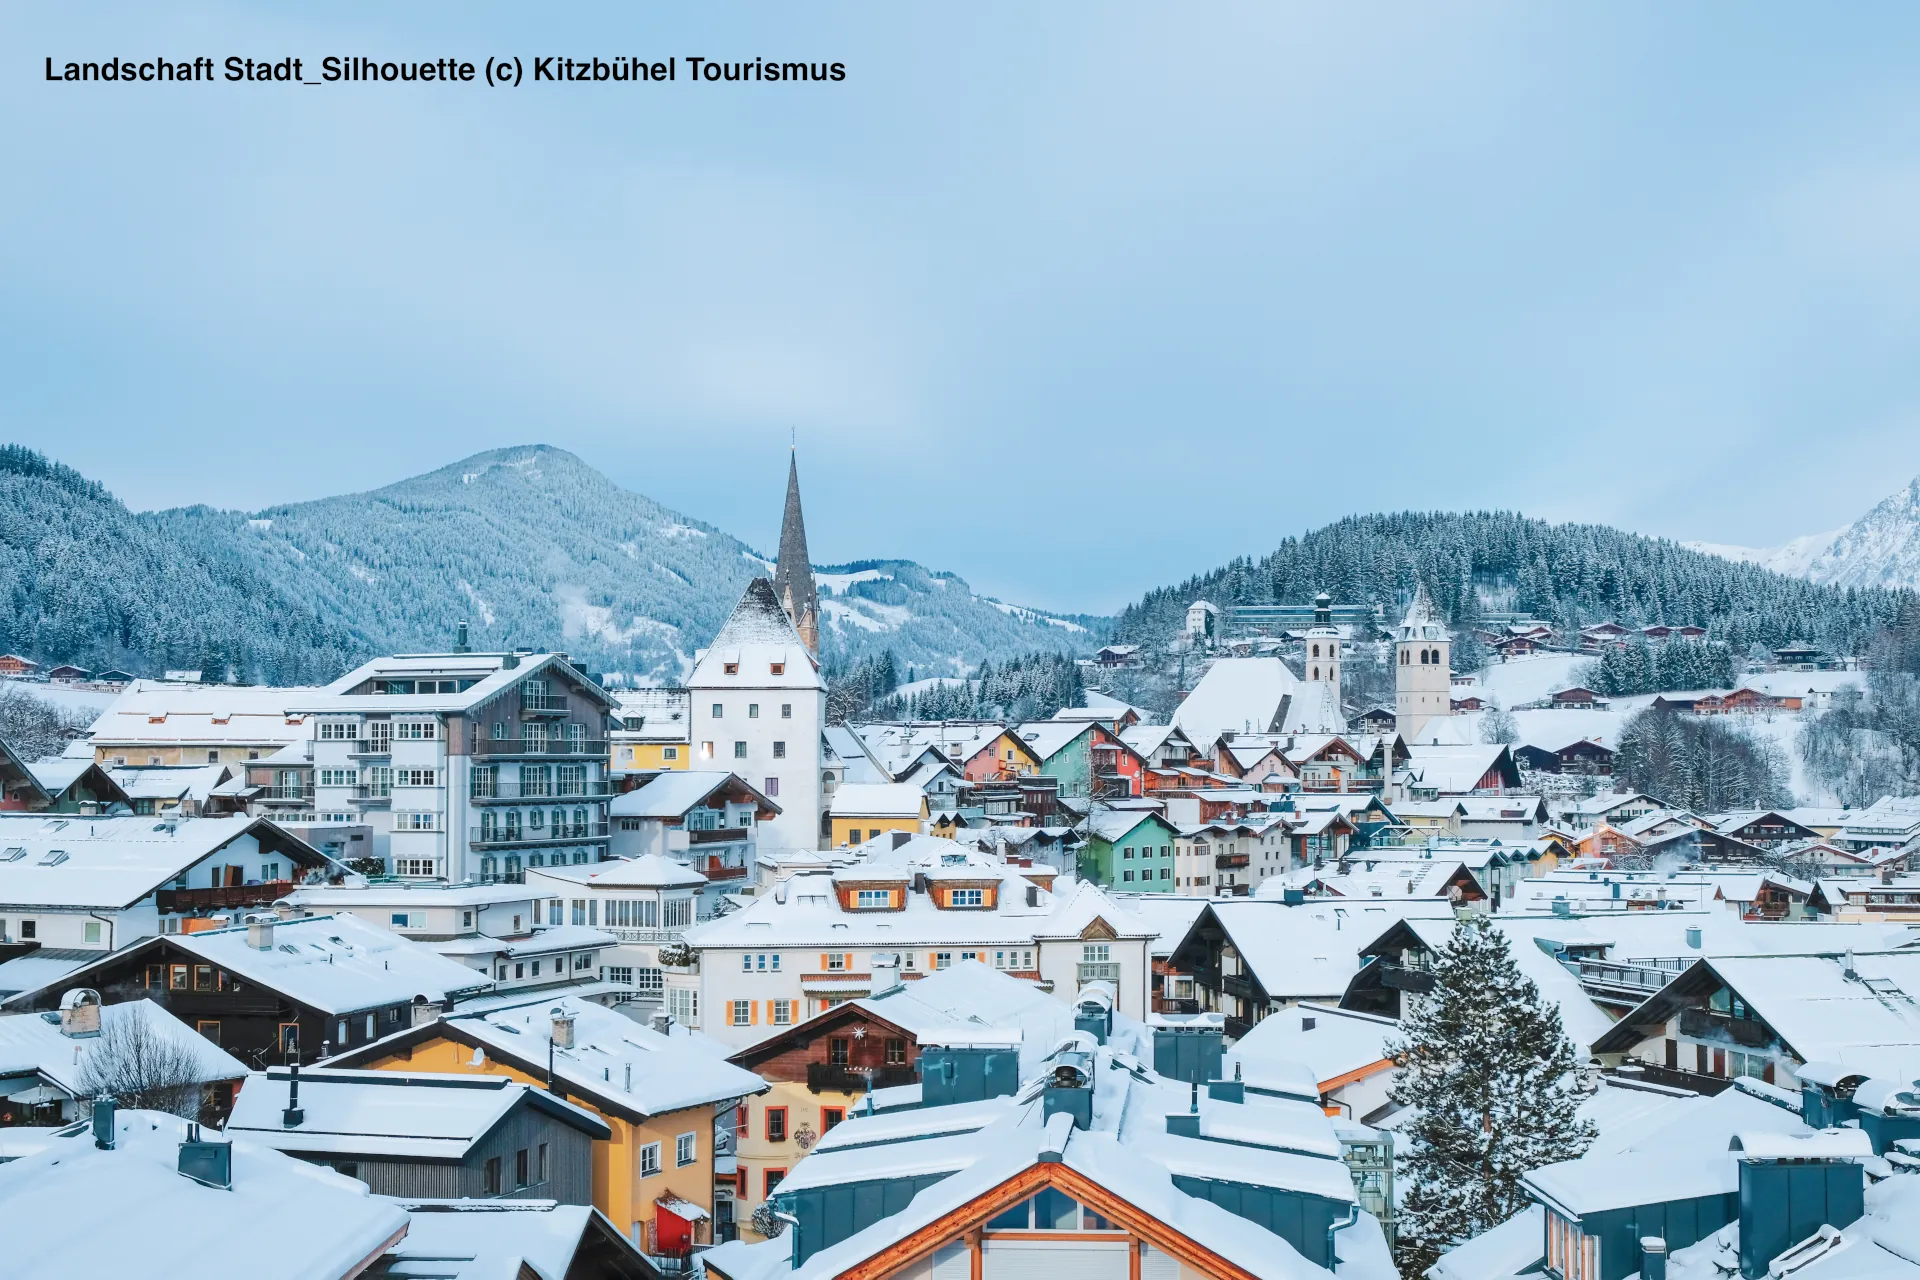 Kitzbuhel village in winter